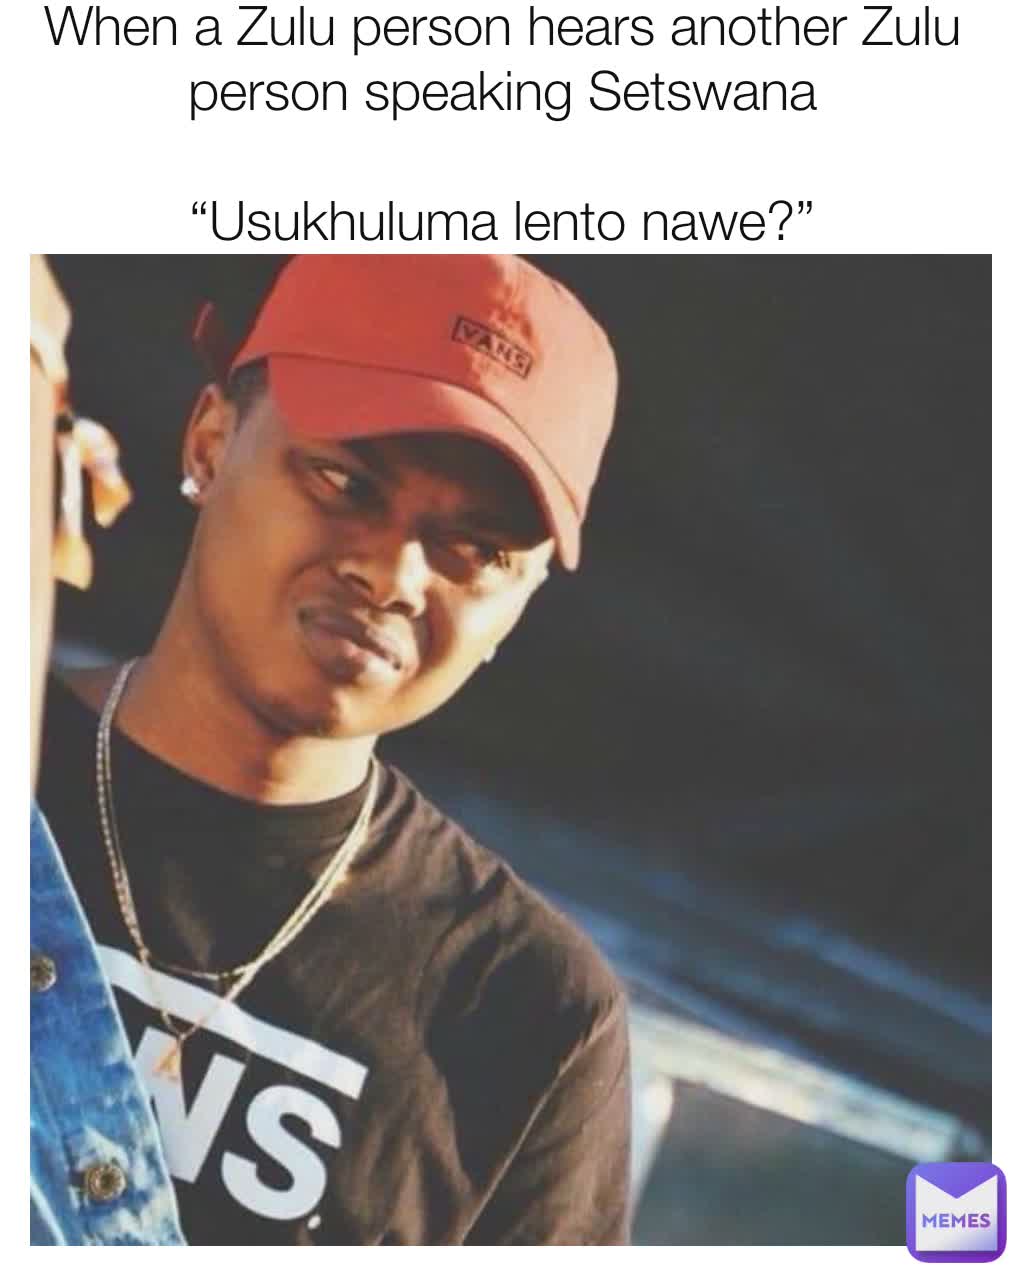 When a Zulu person hears another Zulu person speaking Setswana

“Usukhuluma lento nawe?”